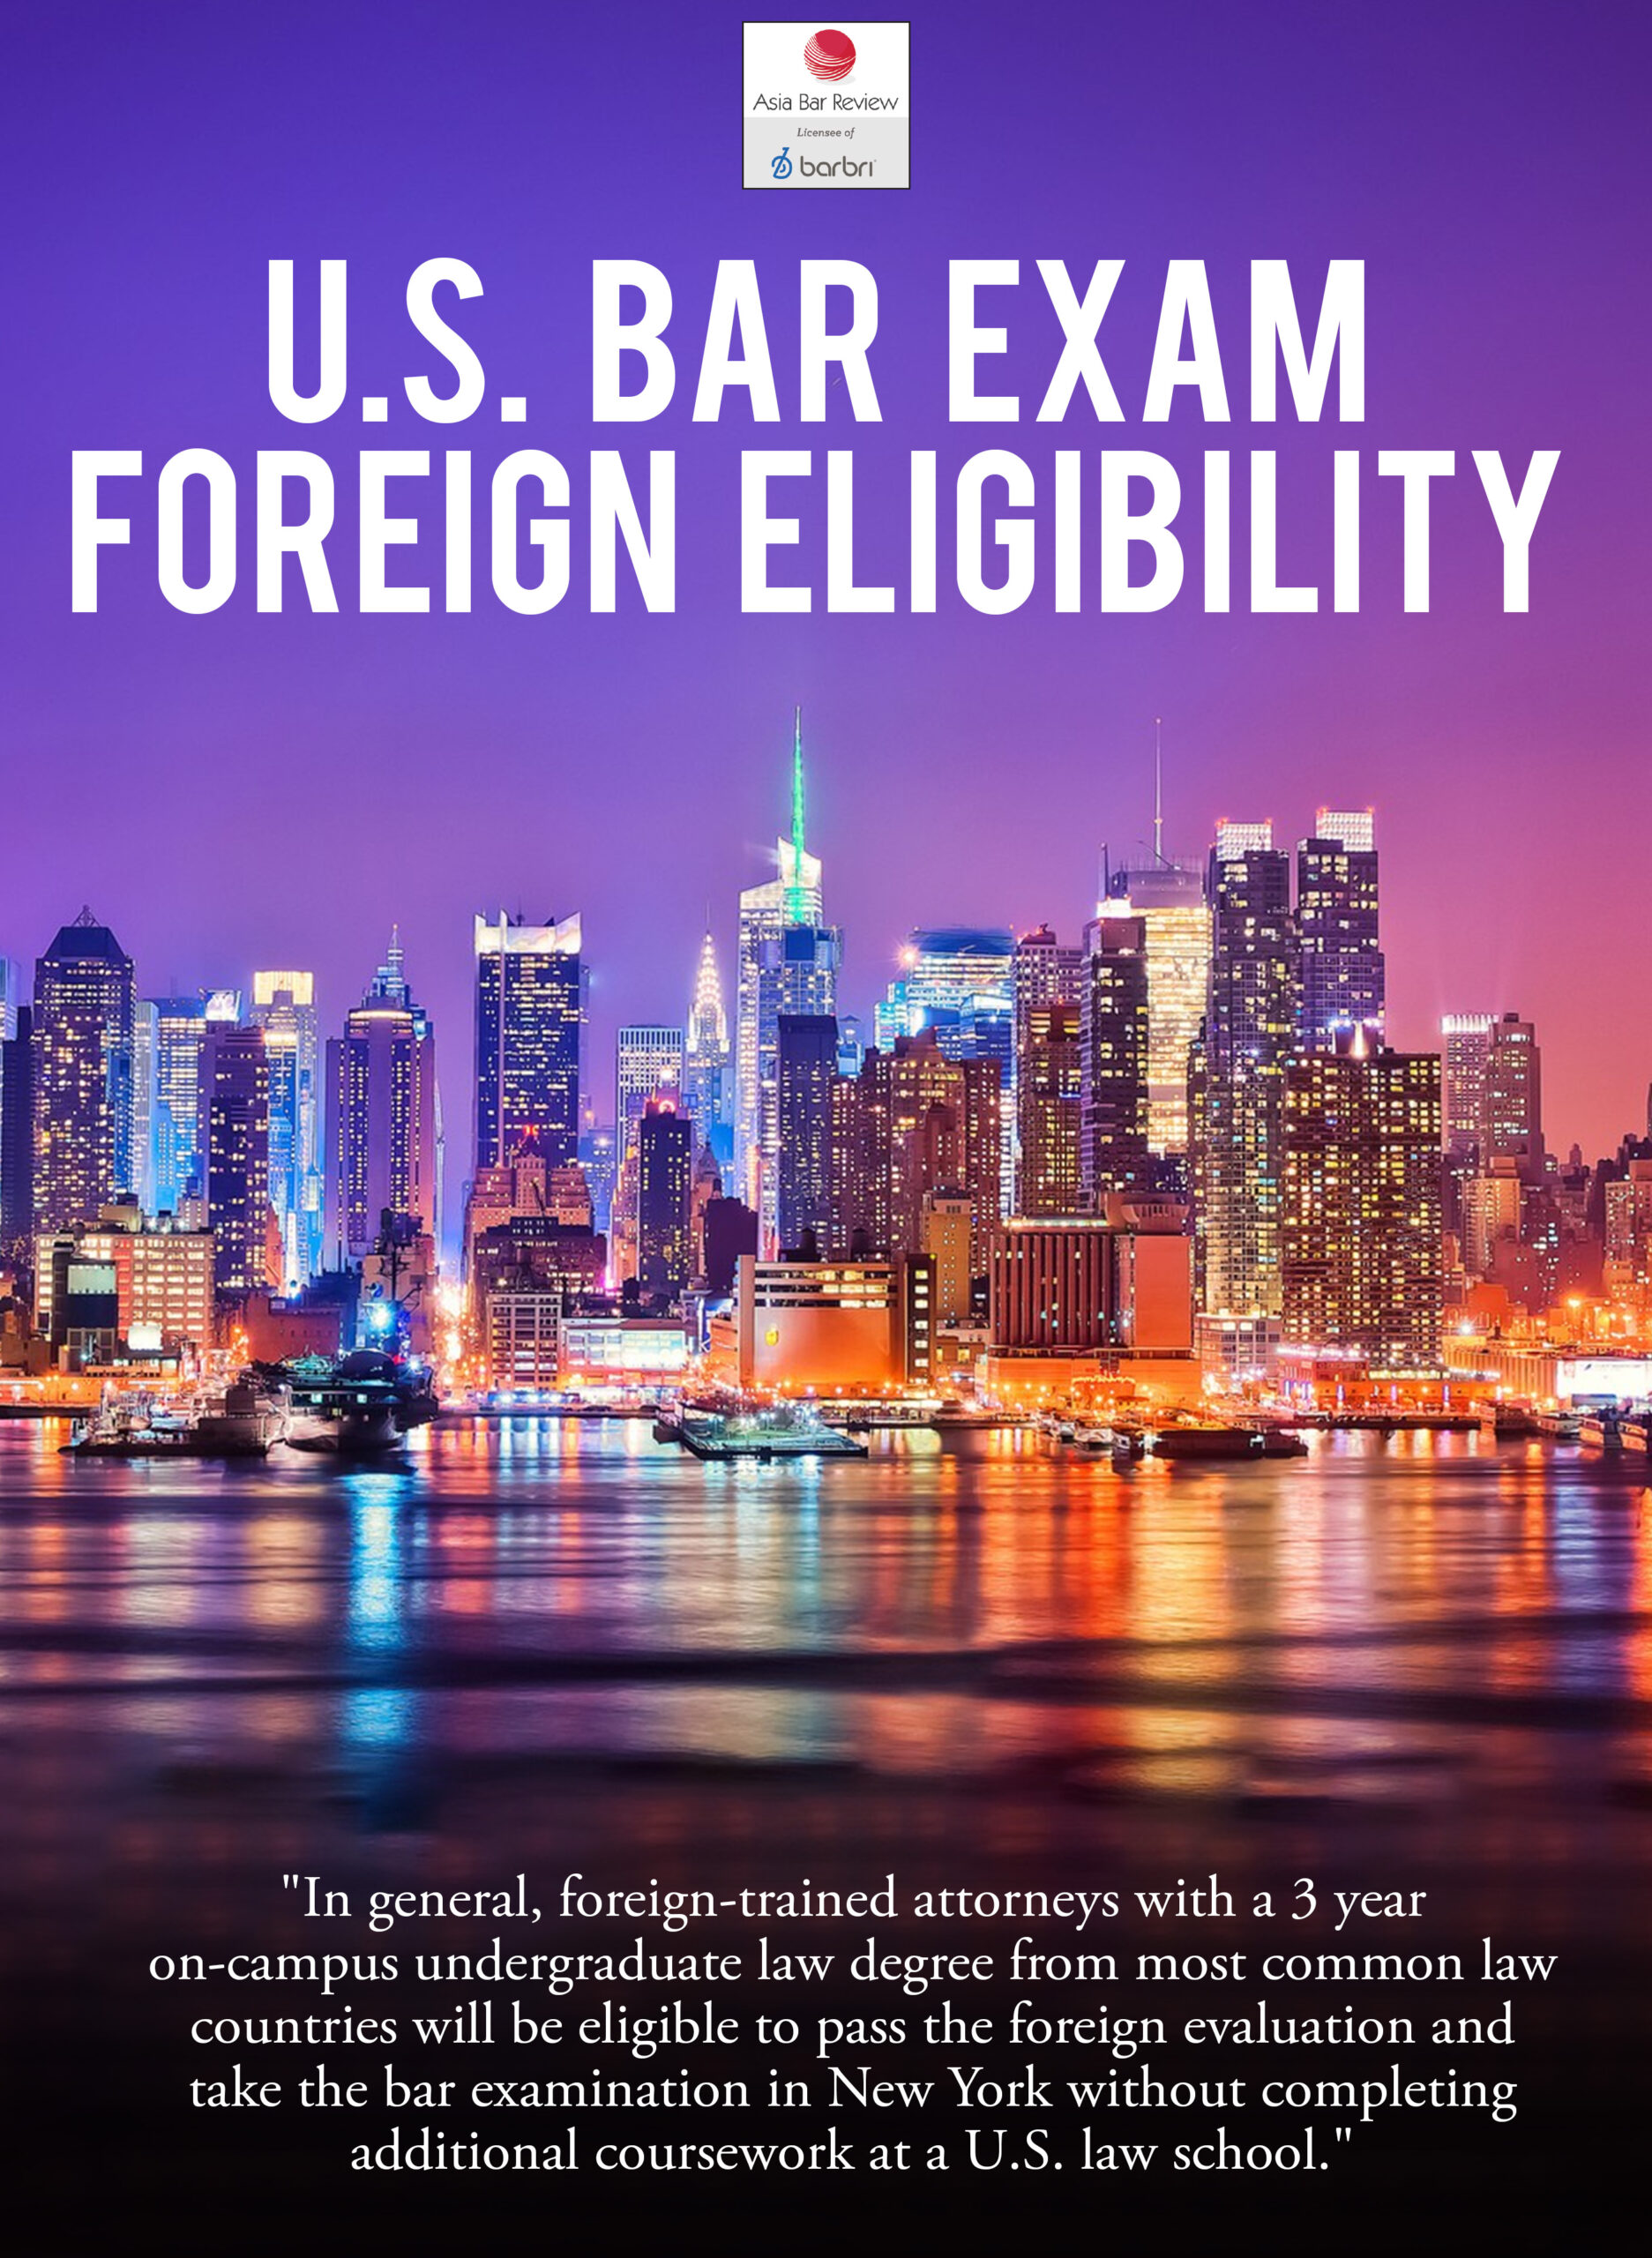 NY Bar Exam foreign eligibility cover scaled